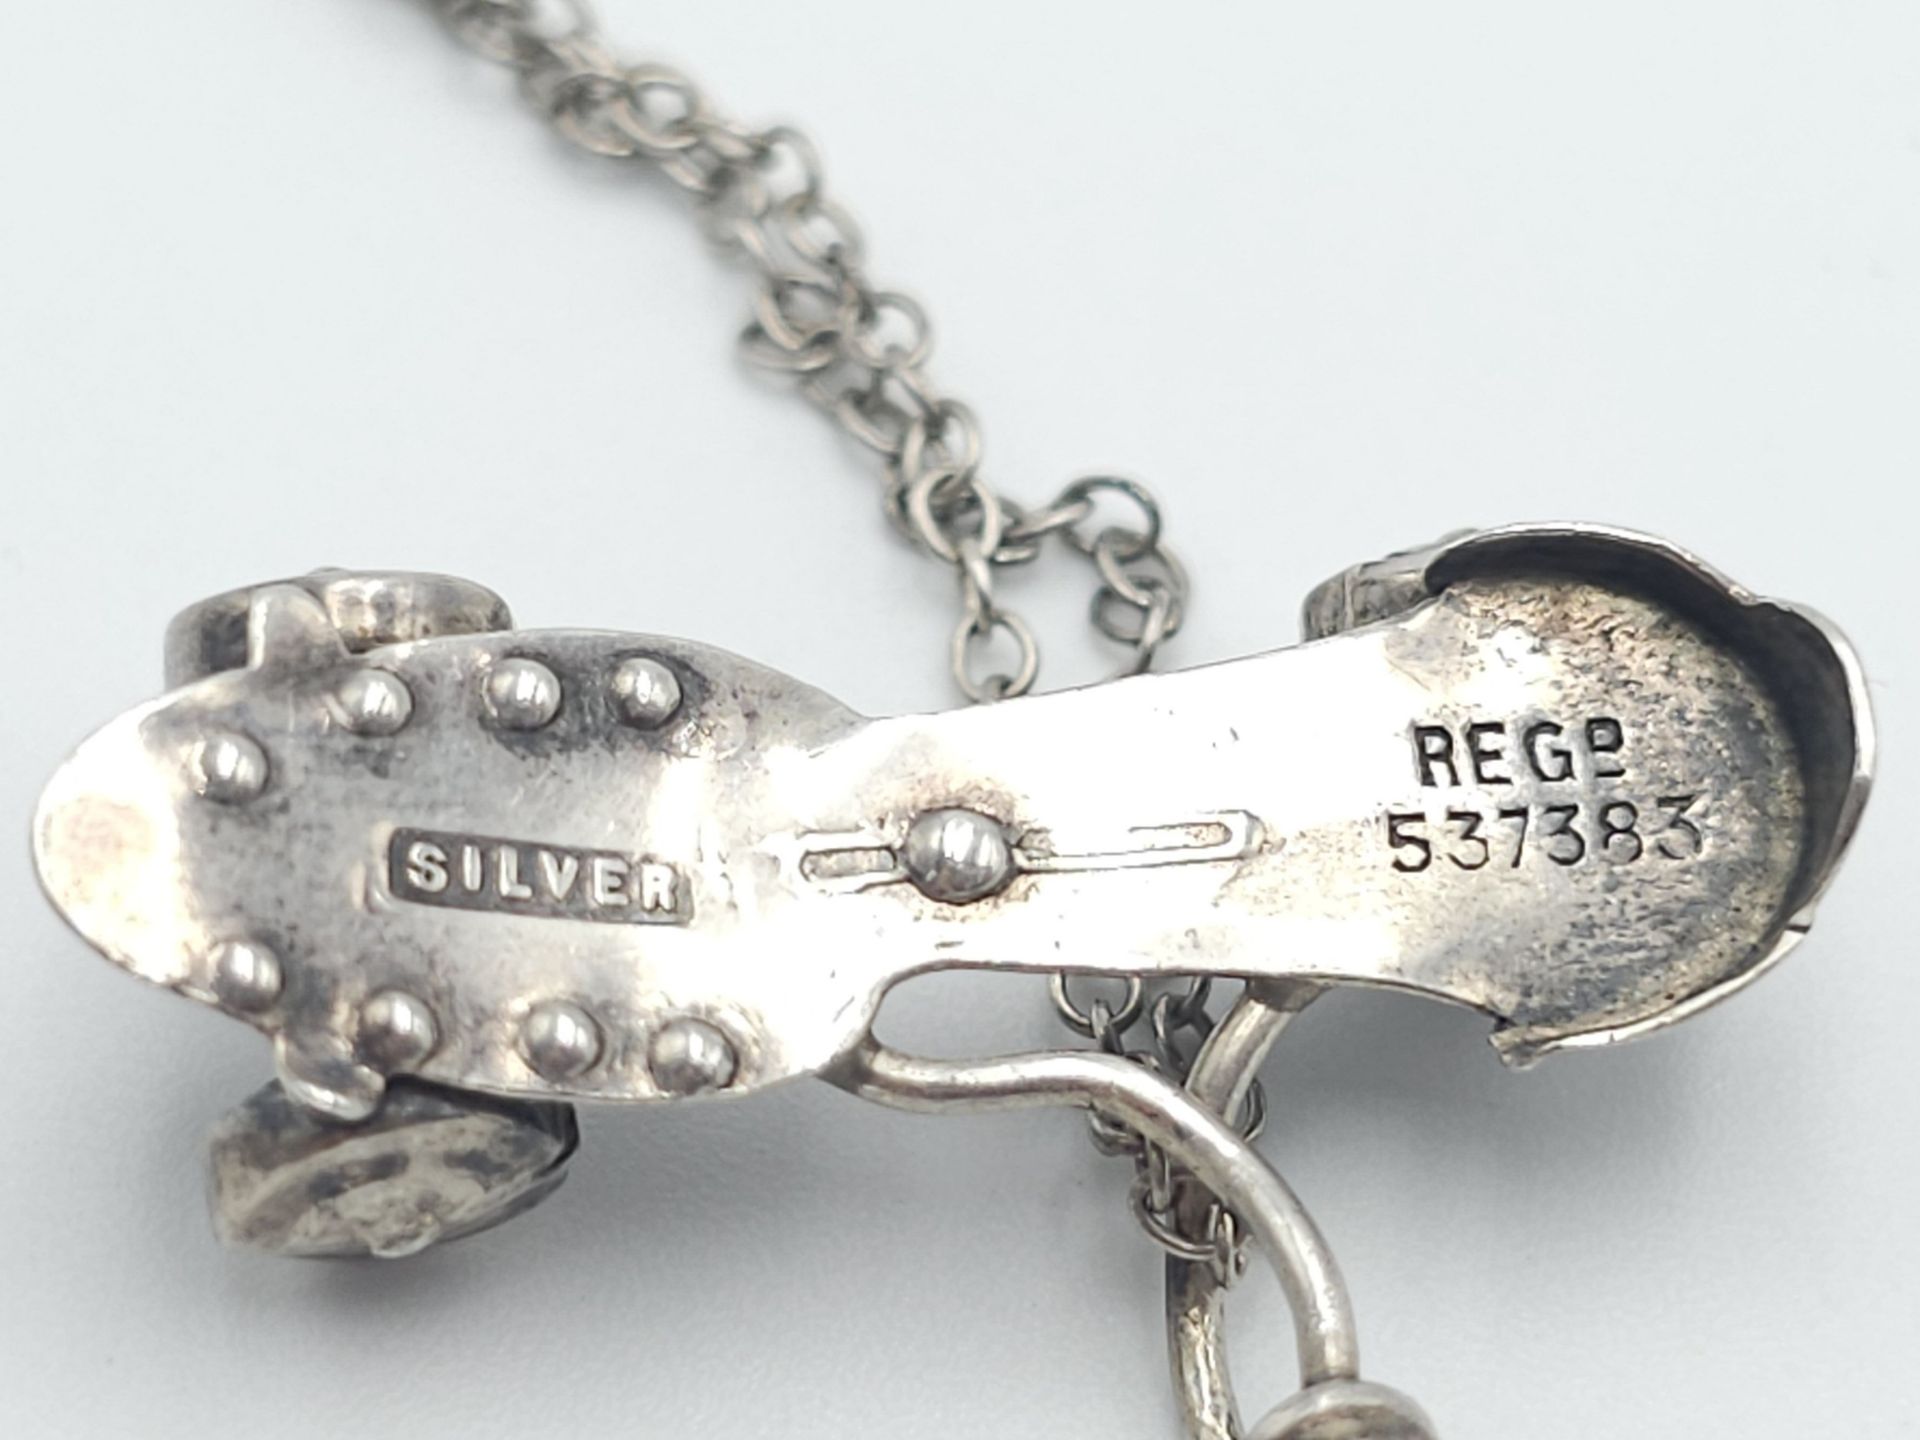 A Vintage Silver Roller Skate Pendant Necklace. 42cm Length. Silver Pendant has a Registered Mark on - Image 9 of 9